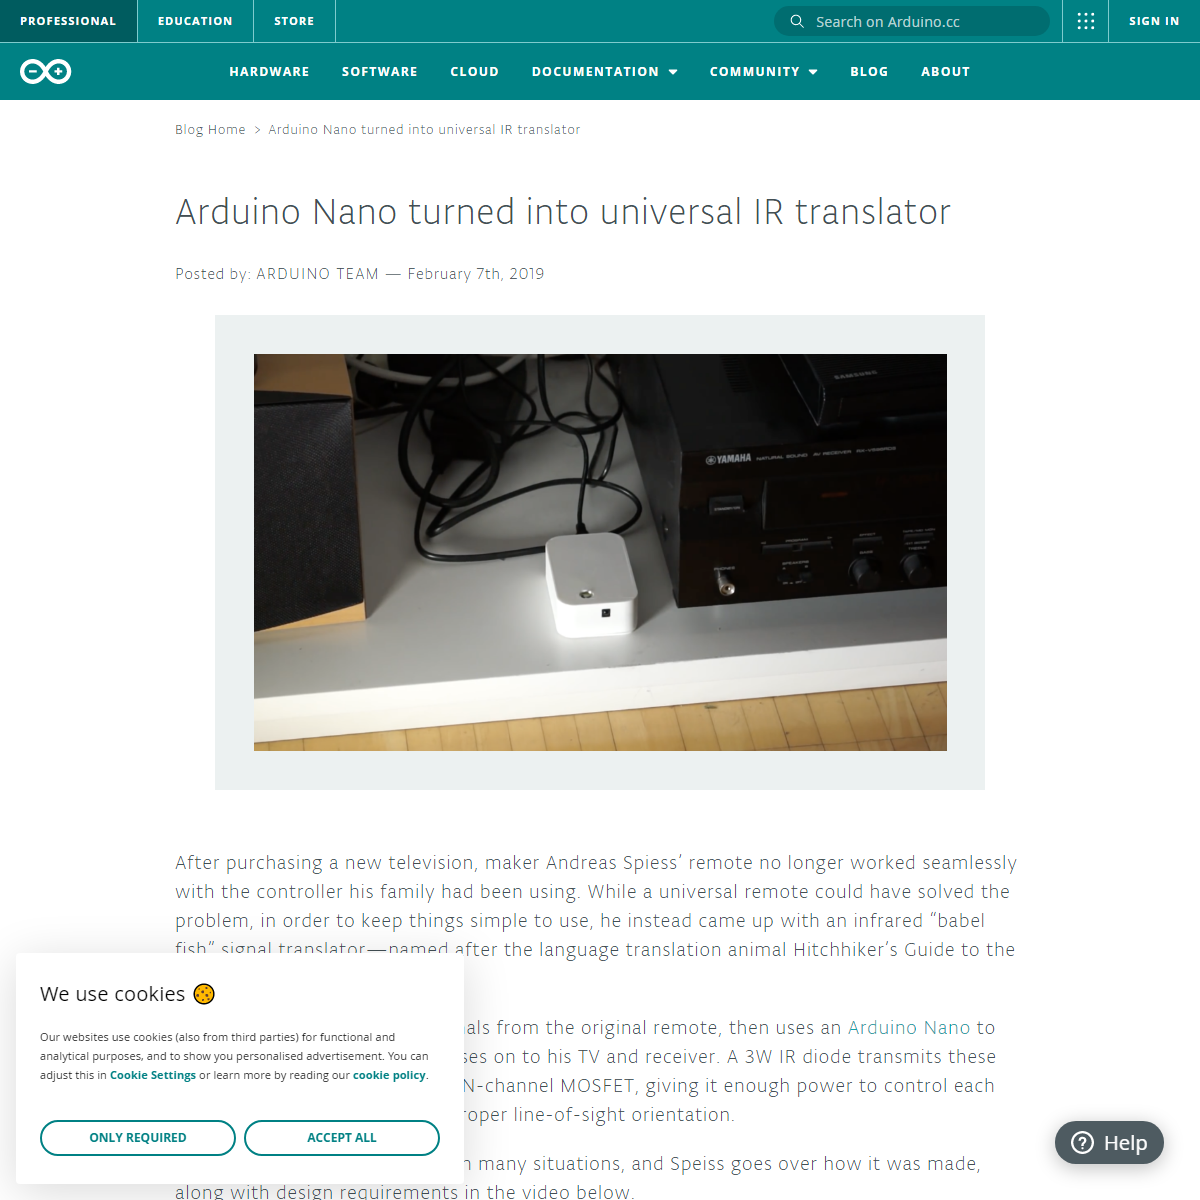 A complete backup of https://blog.arduino.cc/2019/02/07/arduino-nano-turned-into-universal-ir-translator/